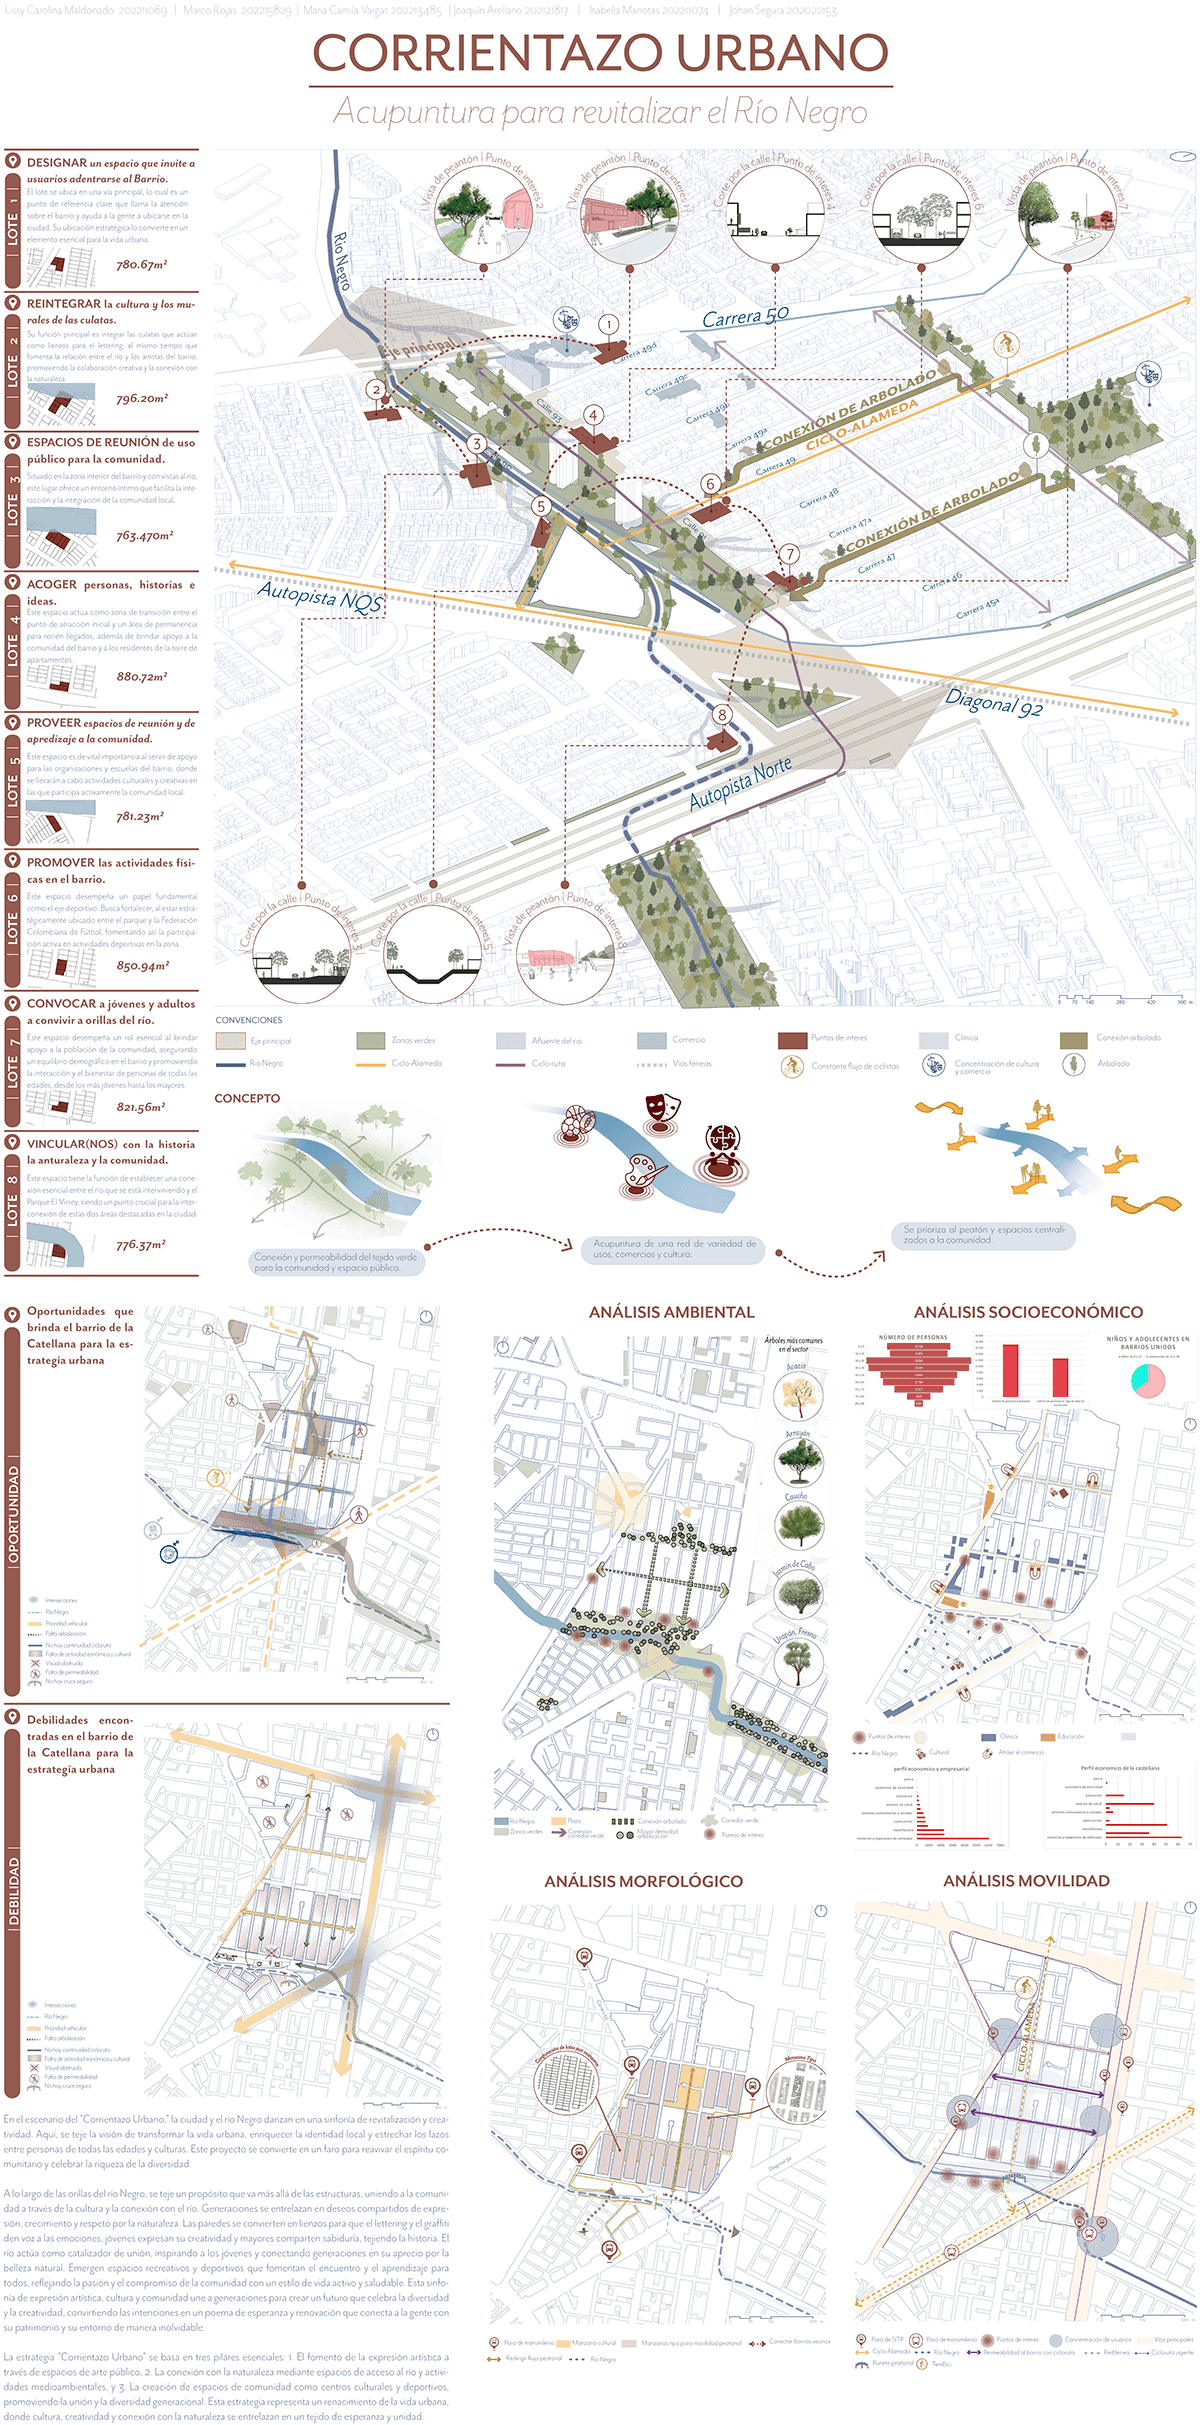 ARQUNIANDES territorio urbanismo ENTREGA2 estrategia urbana ARQT2204 marco rojas